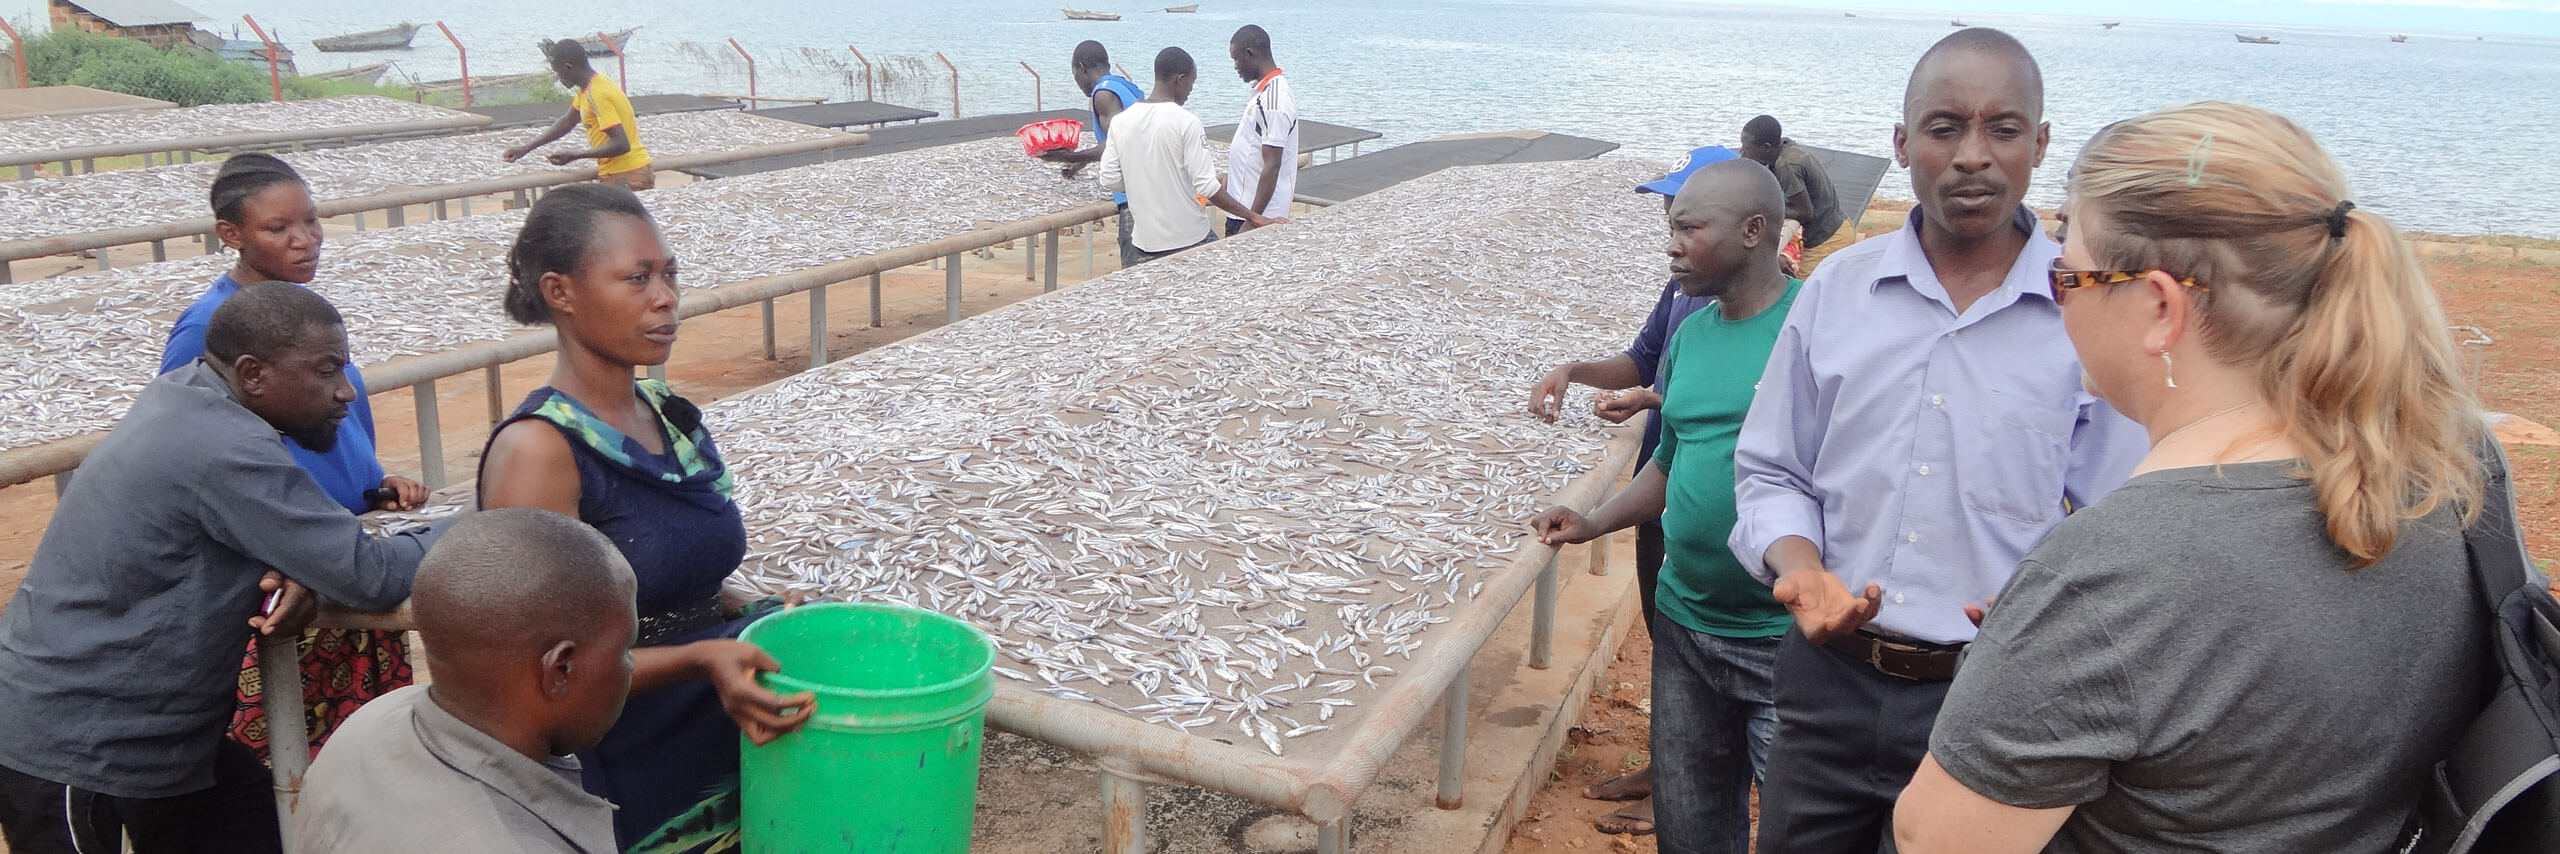 Researcher speaks to fisherman in Tanzania.